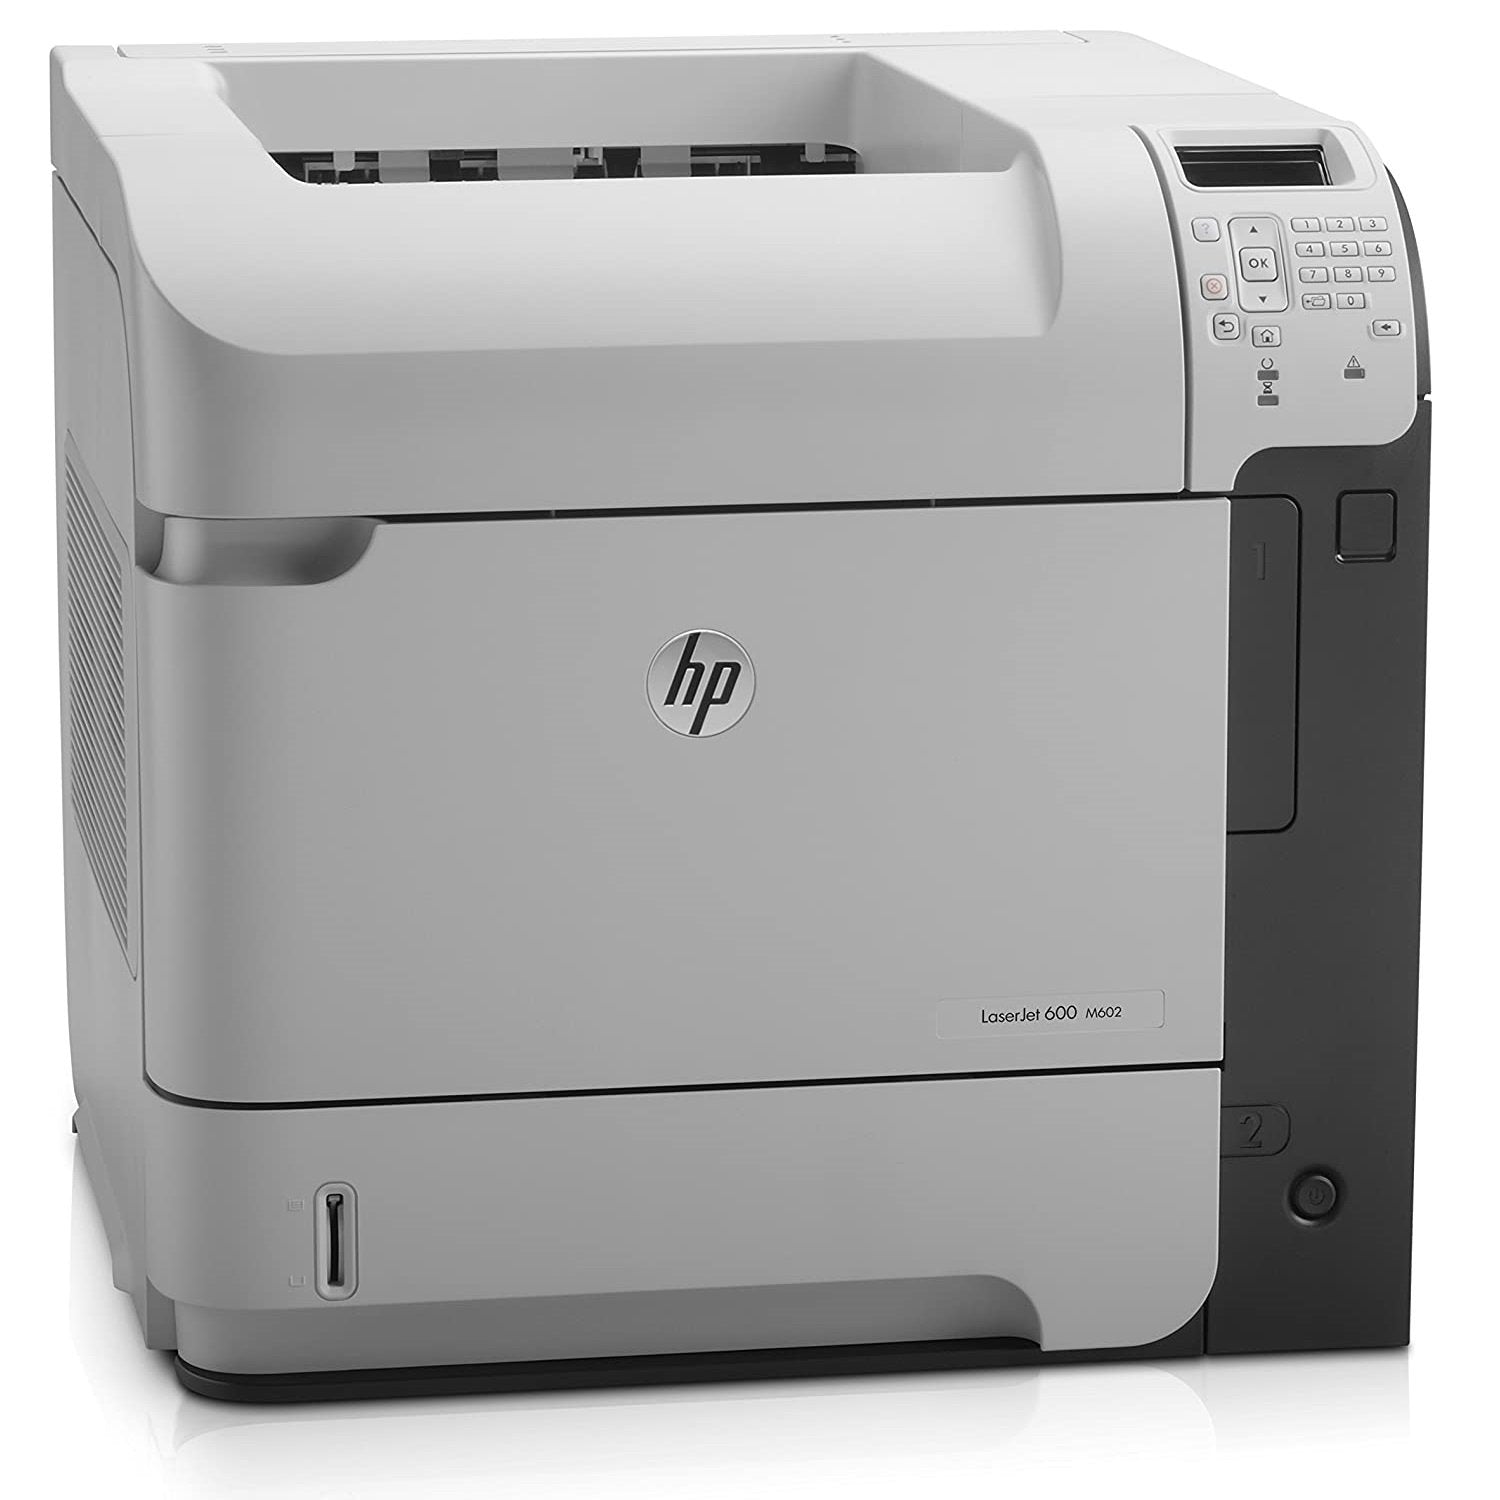 Absolute Toner HP LaserJet Enterprise 600 M602 (CE992A) Monochrome Laser Printer For Office Use | Black & White Laser Printer Showroom Monochrome Copiers